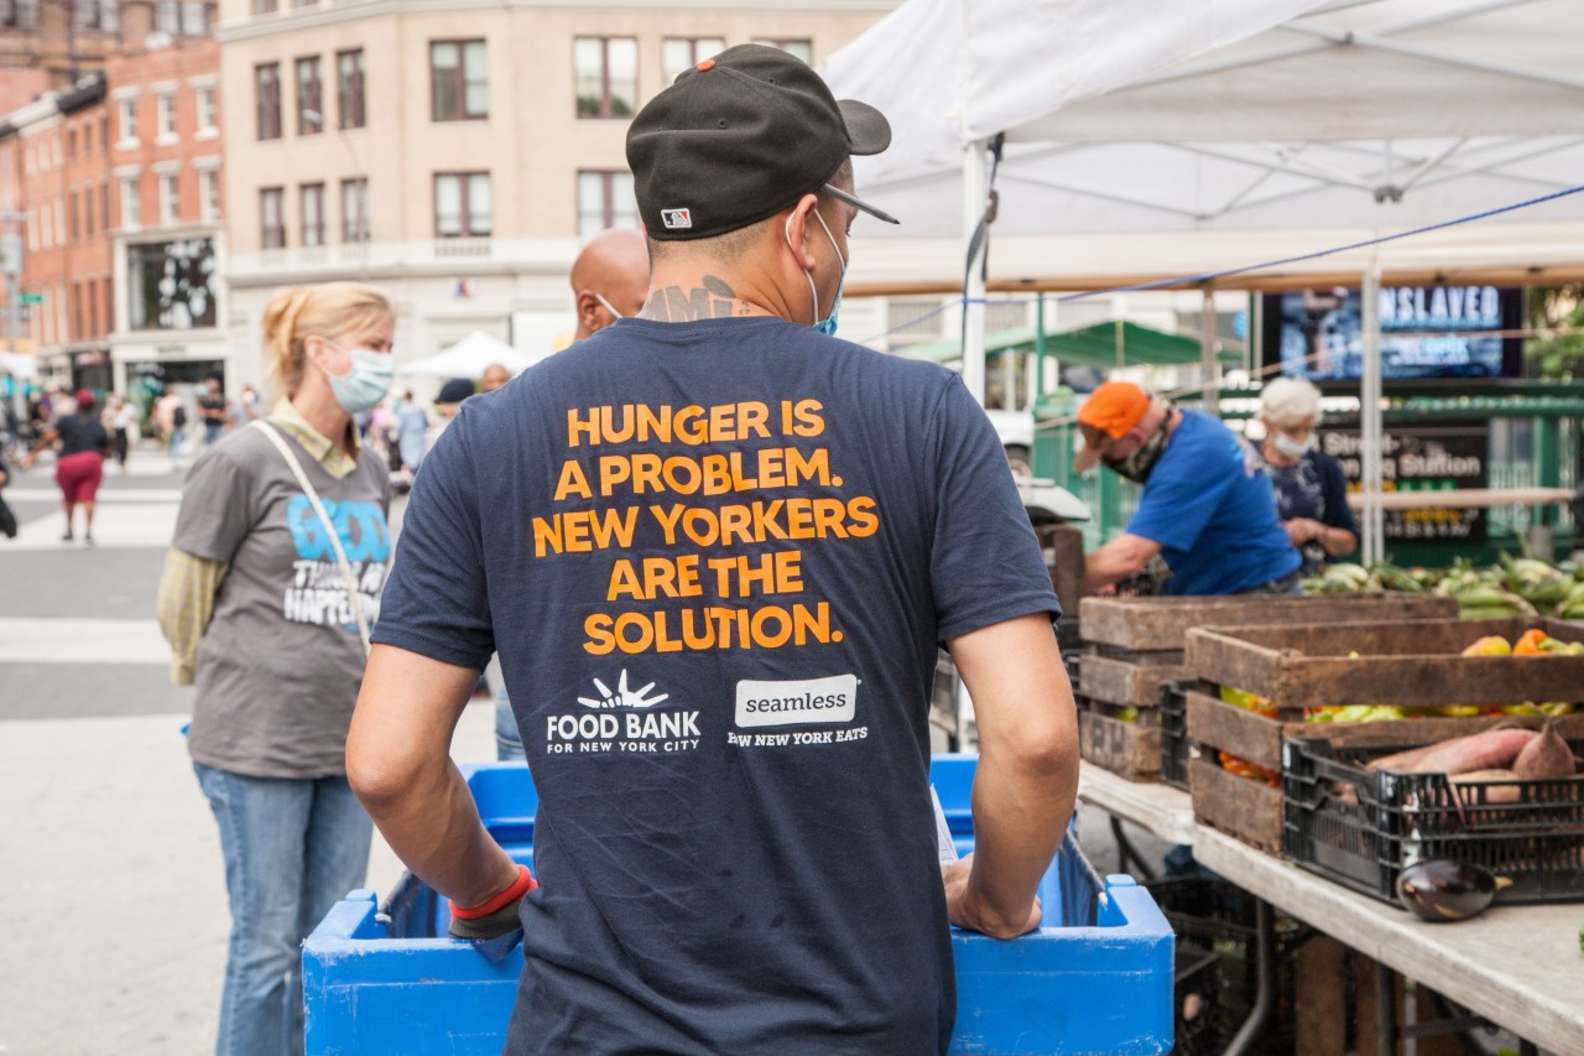 Food Bank For New York City